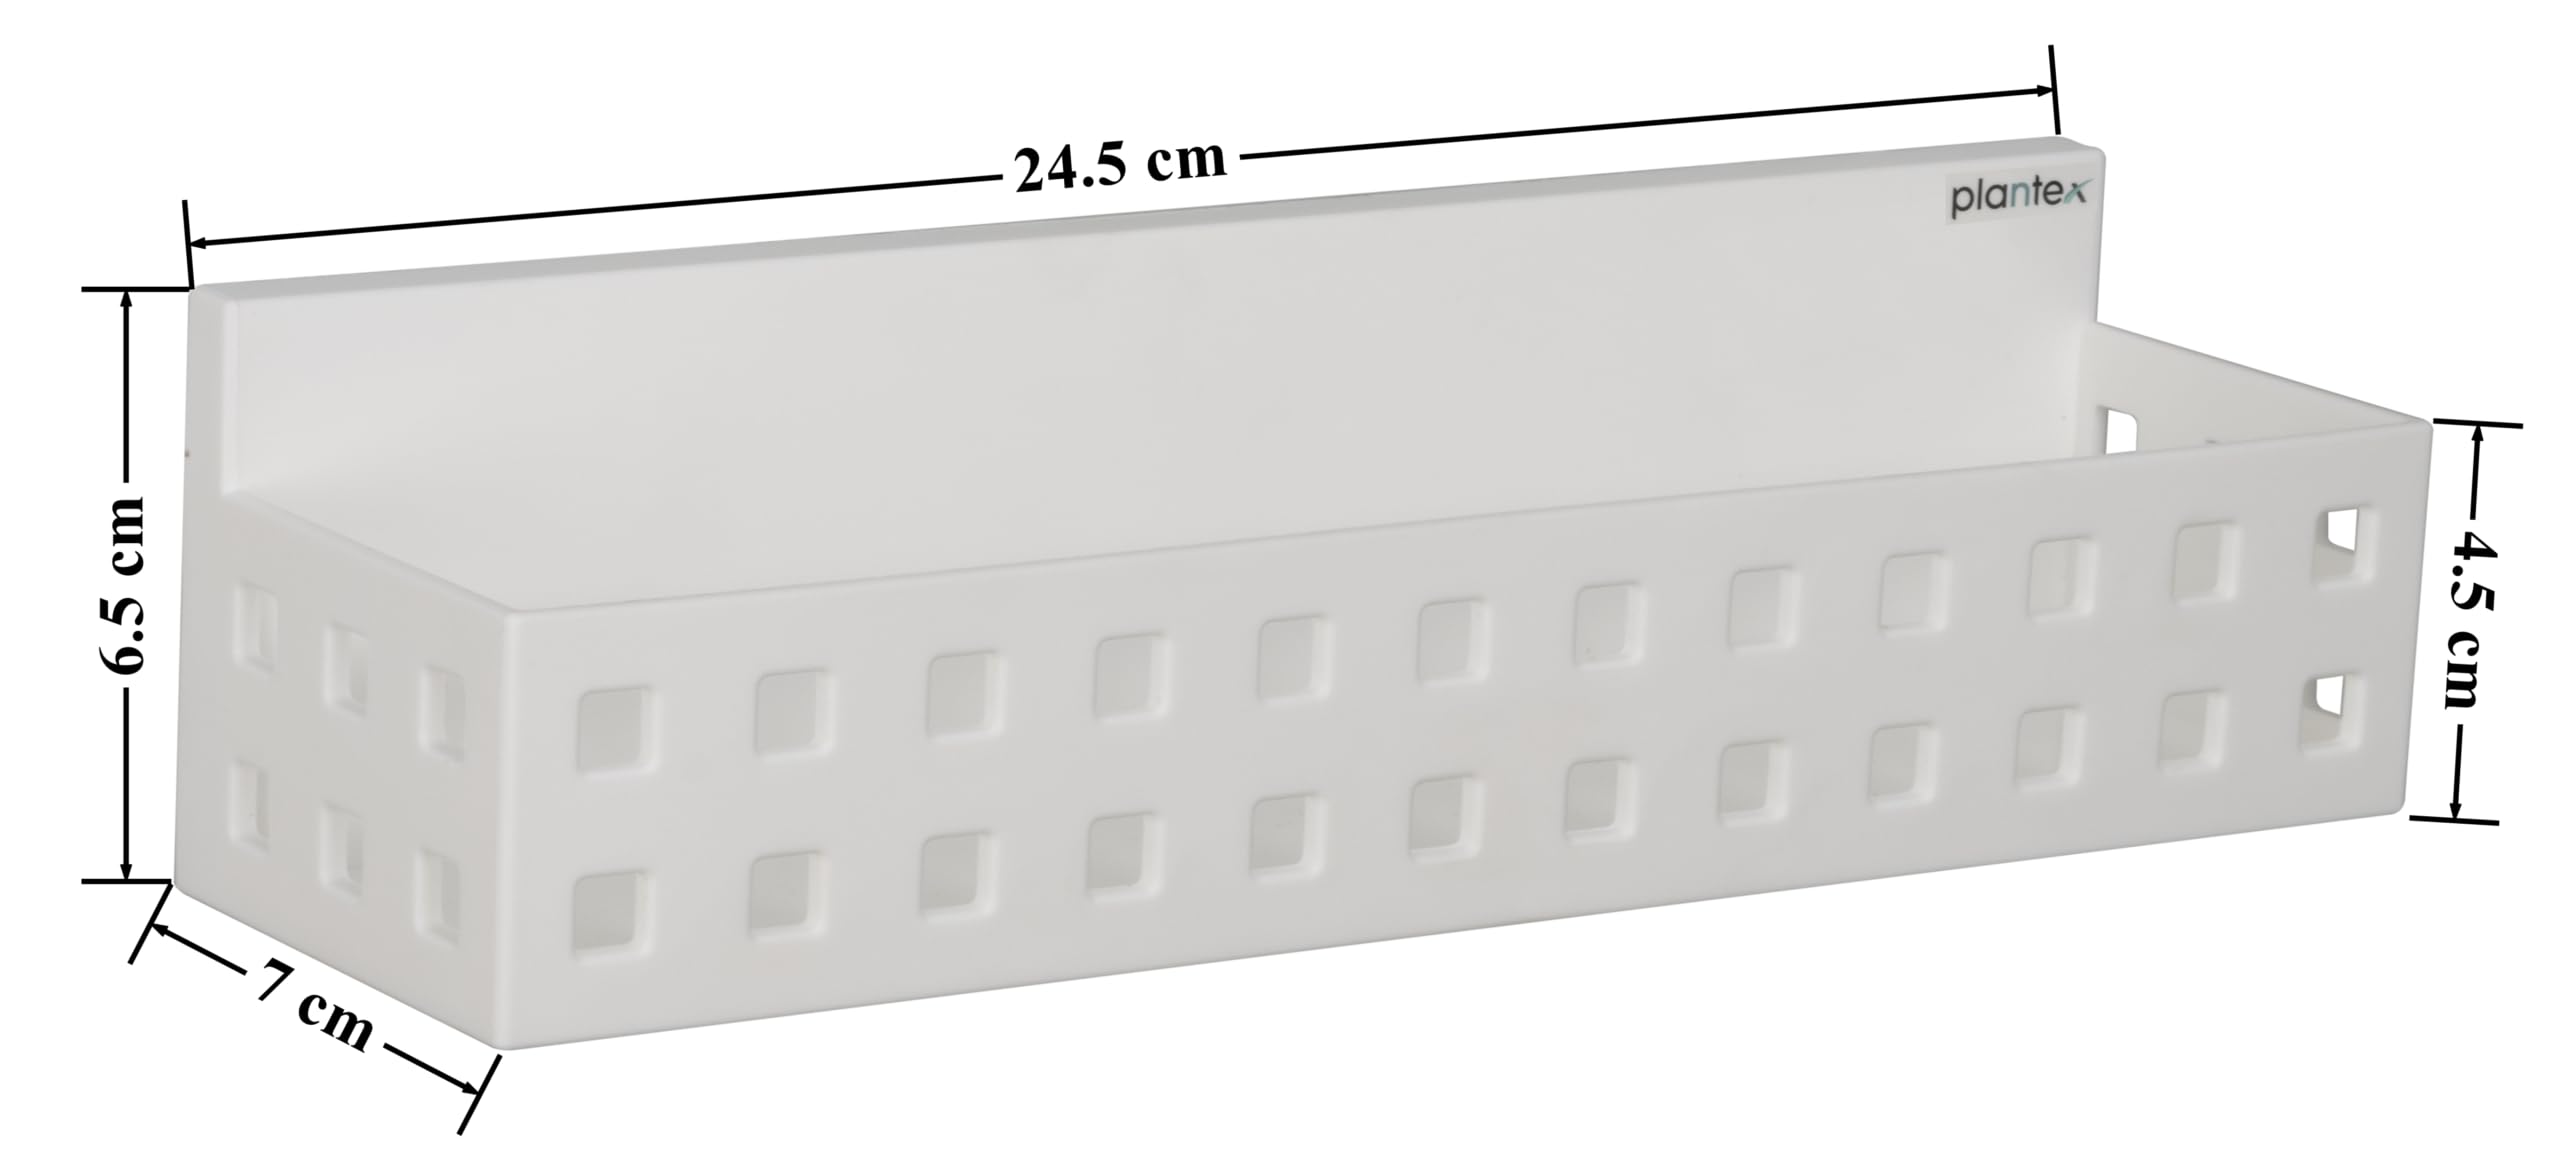 Plantex ABS Plastic Magnetic Shelf for Bathroom/Storage Rack Shelf/Spice Rack for Kitchen - Pack of 1 (White)